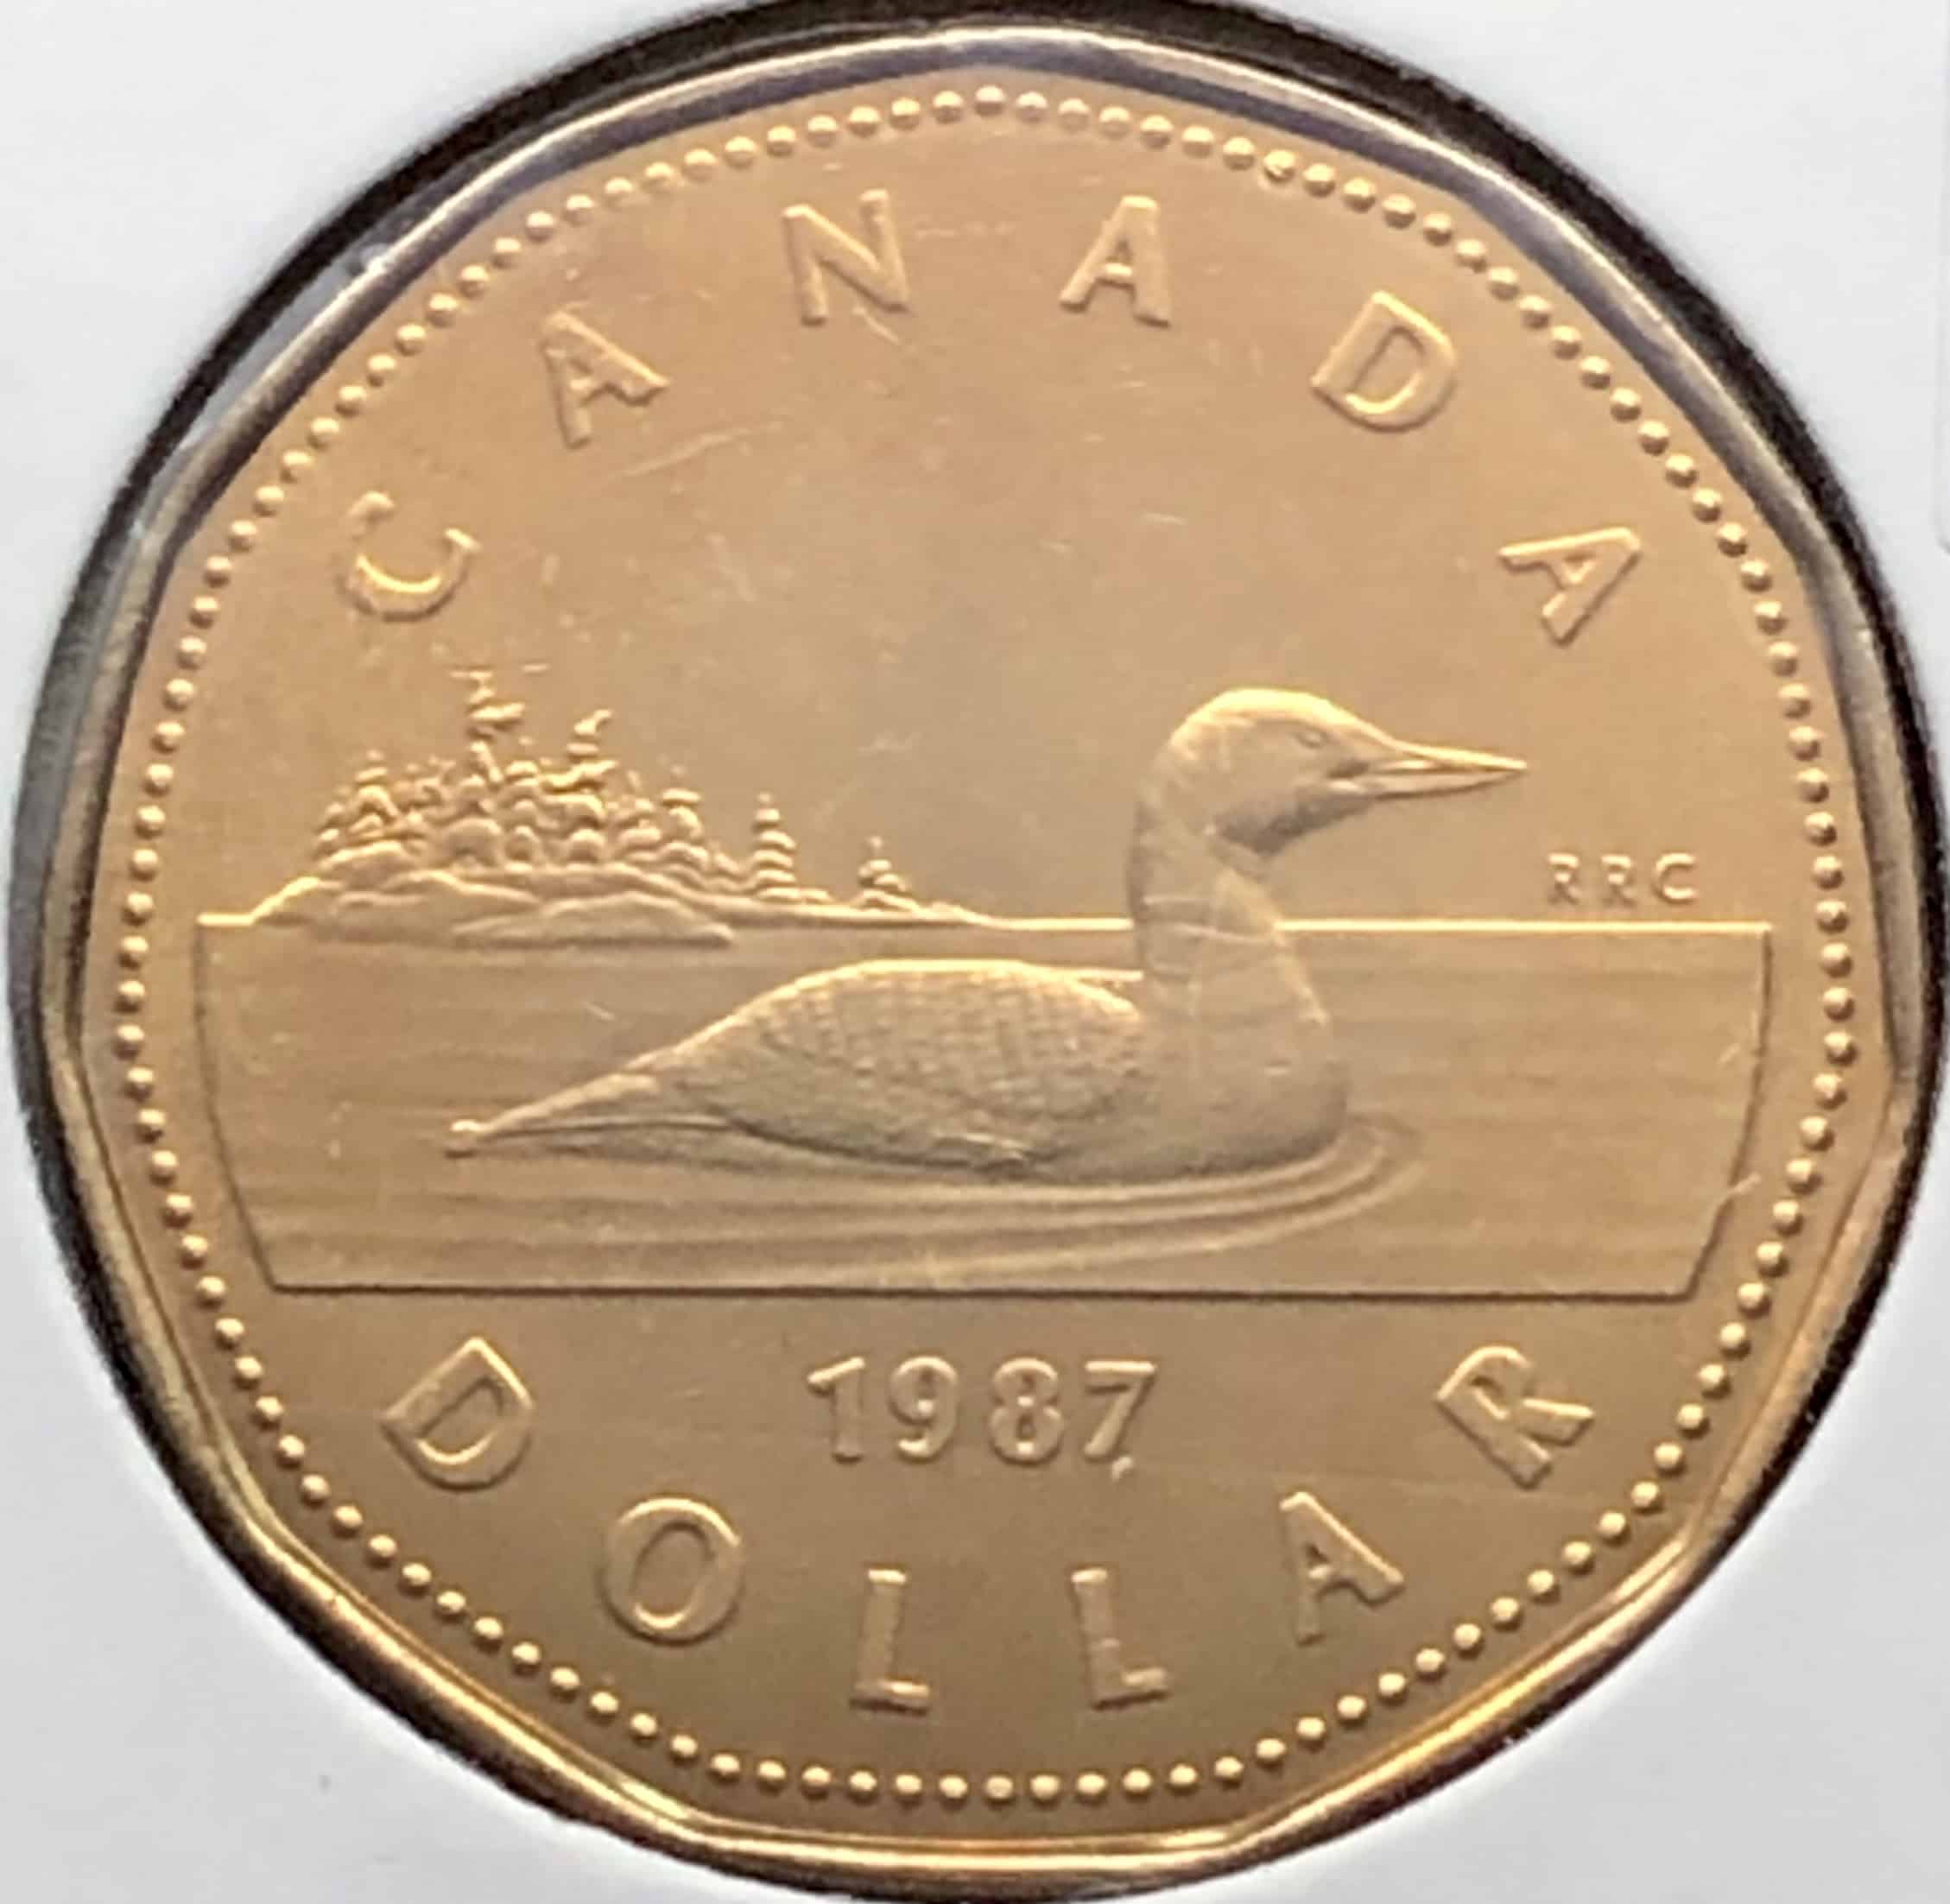 Canada - Dollar 1987 Huard - UNC